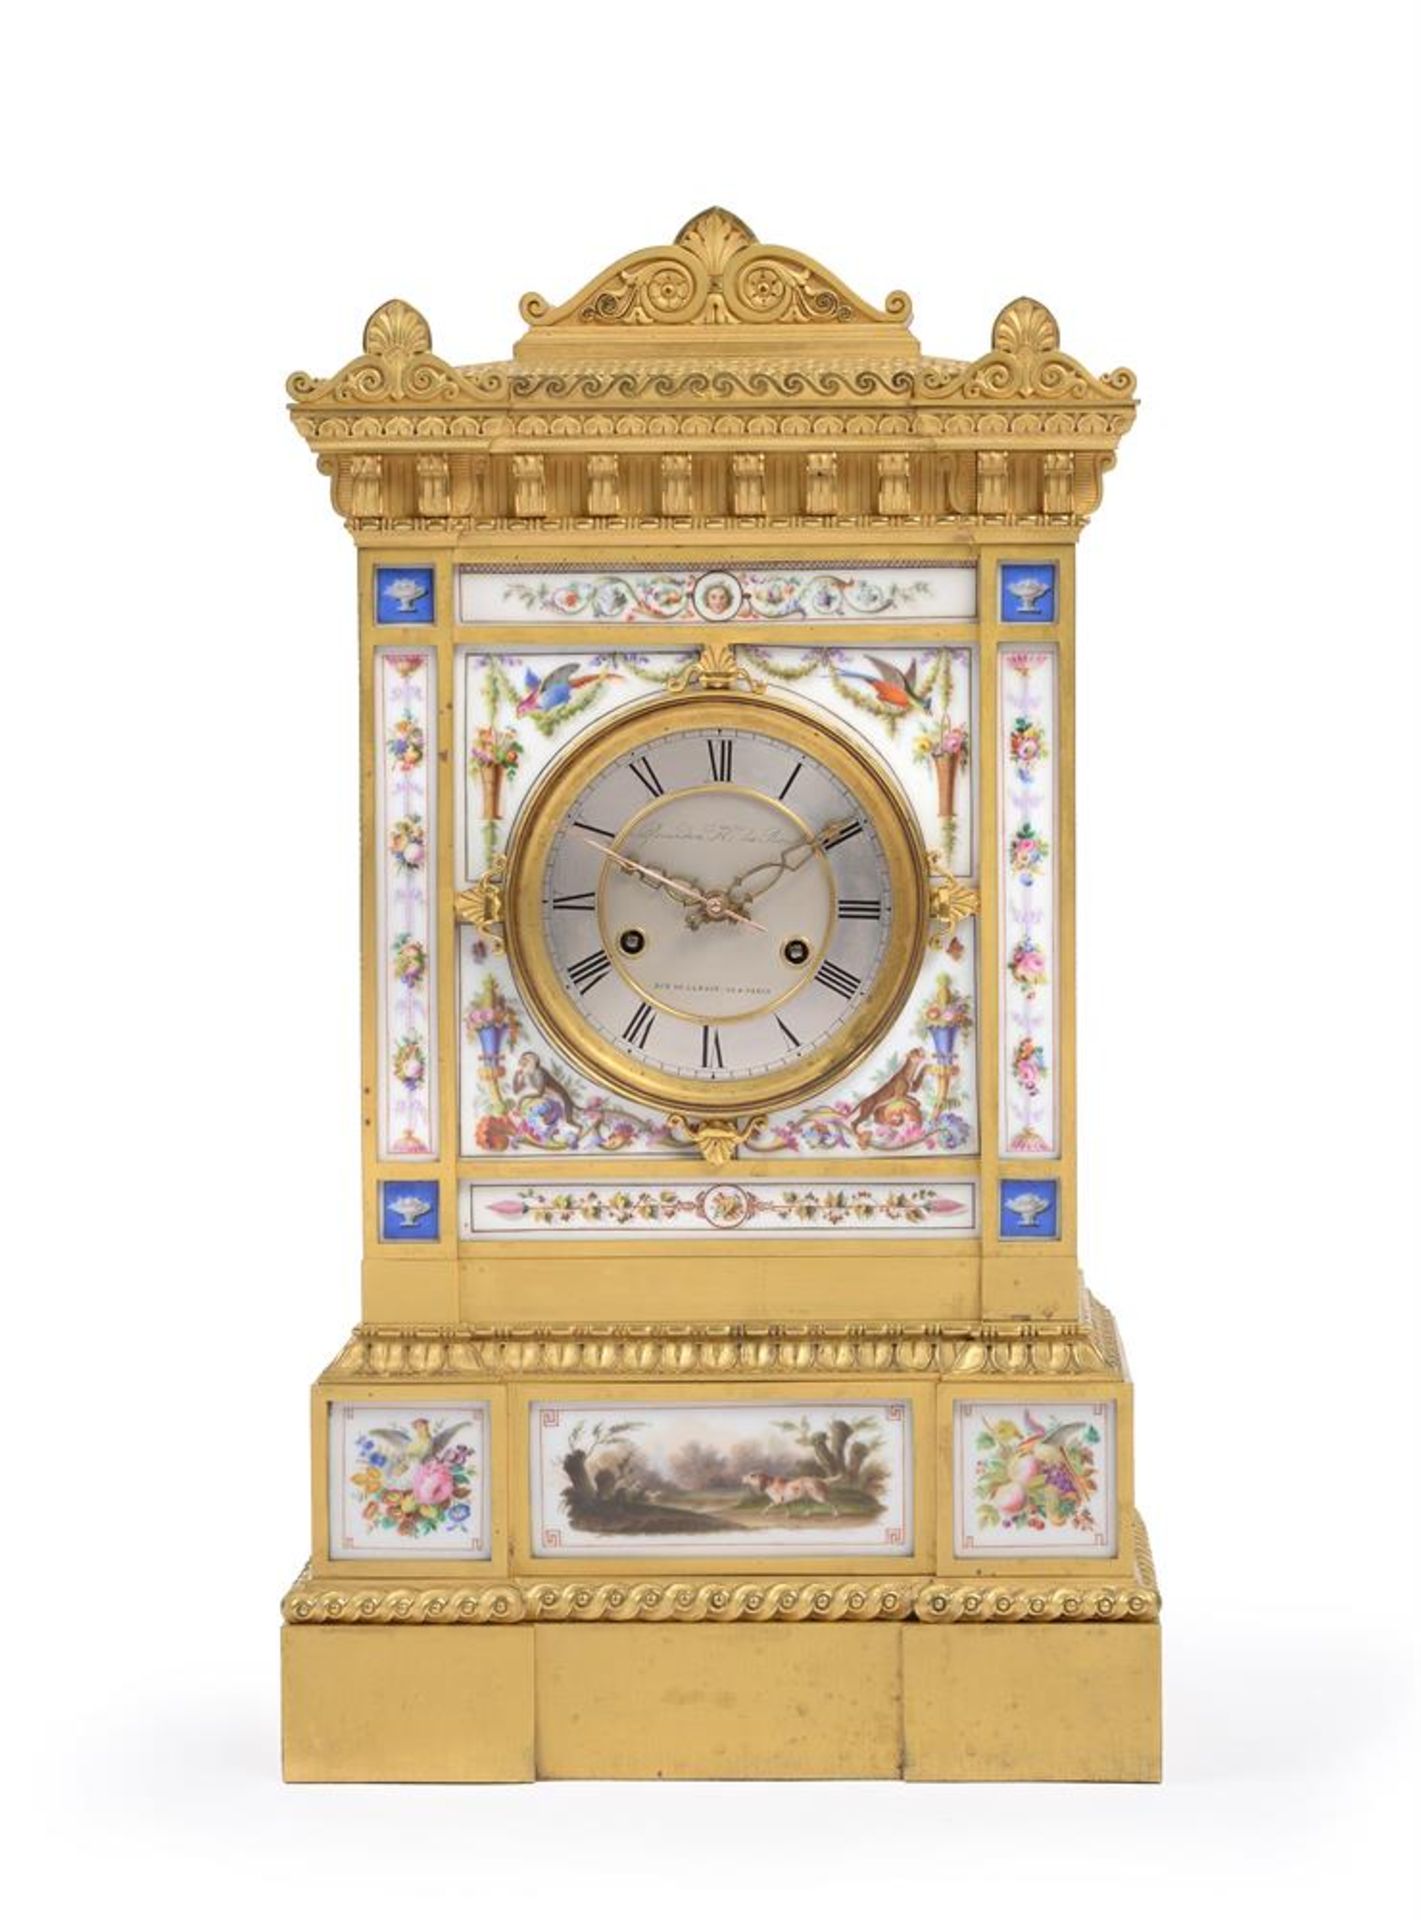 A FRENCH RESTAURATION ORMOLU AND PARIS PORCELAIN ARCHITECTURAL MANTEL CLOCK, CIRCA 1830